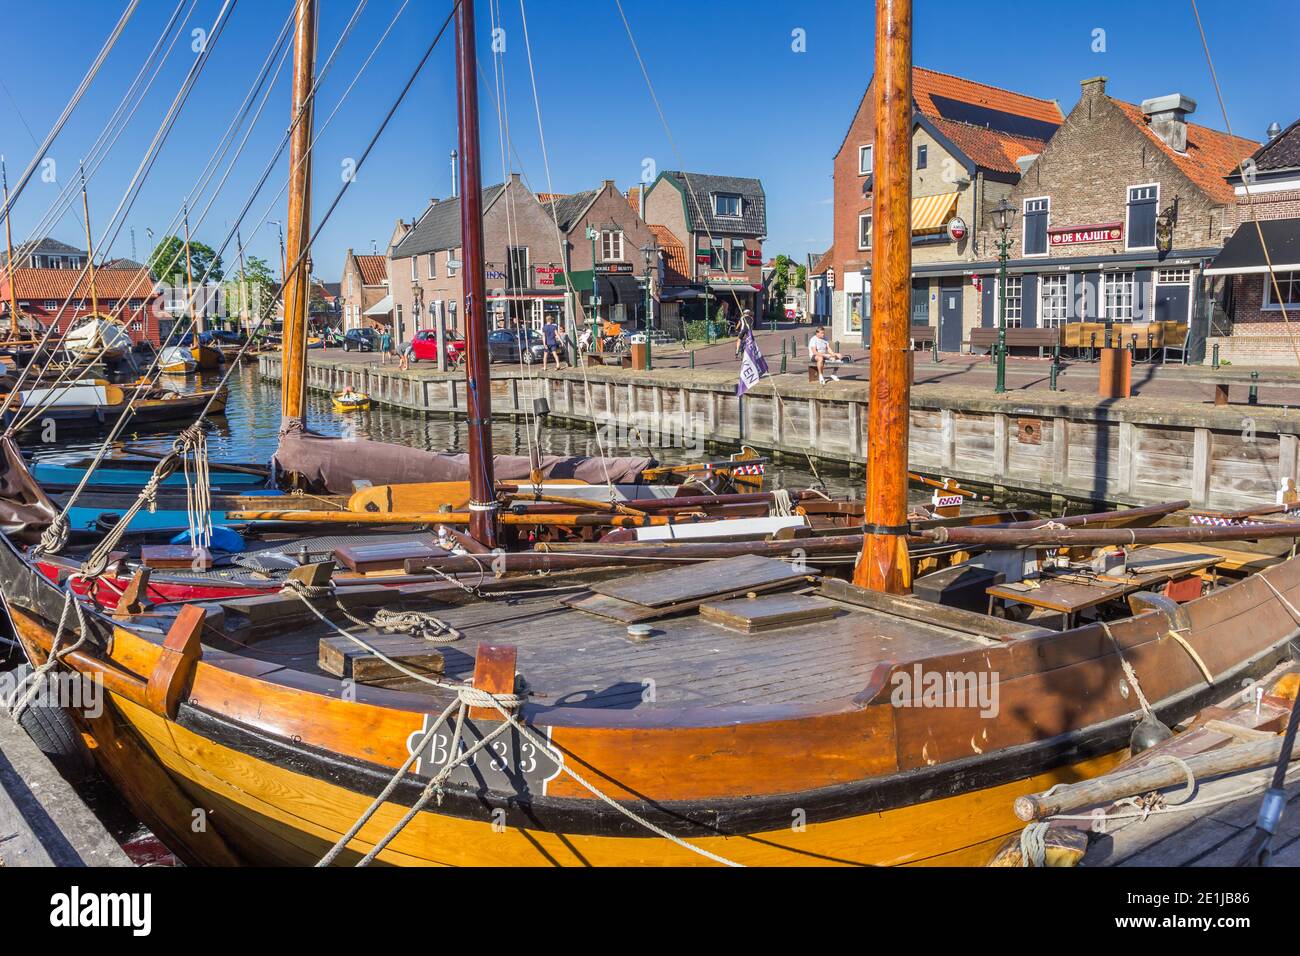 Wooden ships in the harbor of Spakenburg, Netherlands Stock Photo